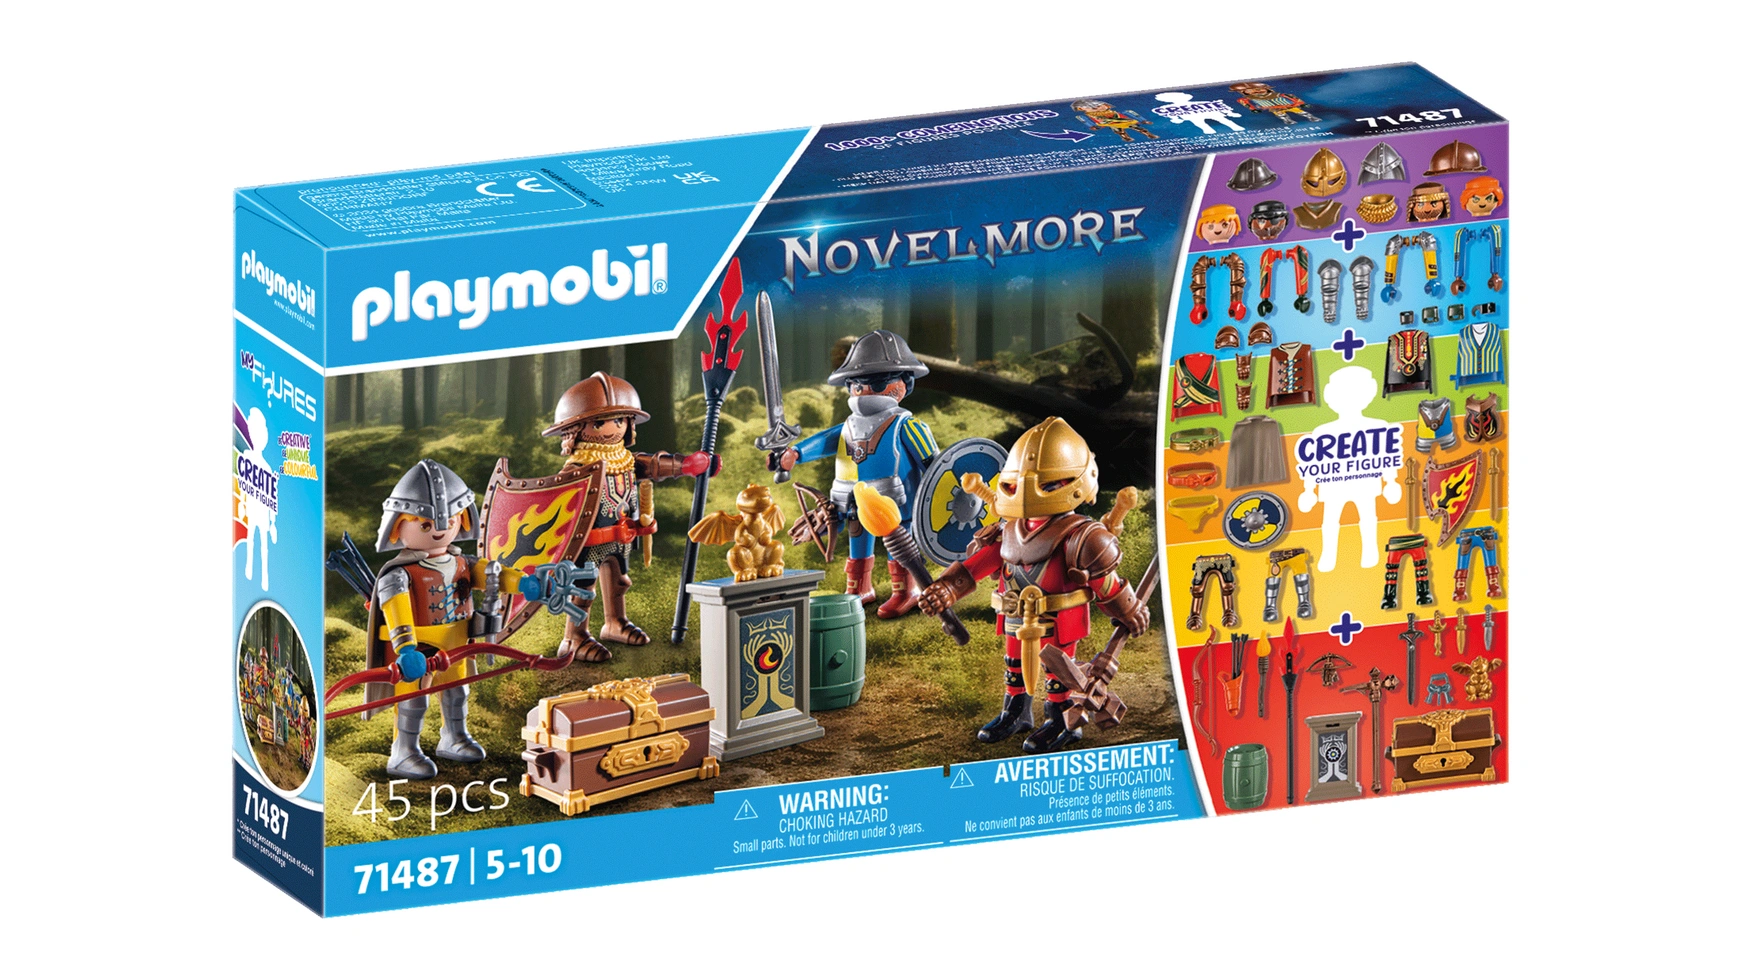 цена Novelmore мои фигурки: рыцари новелмора Playmobil